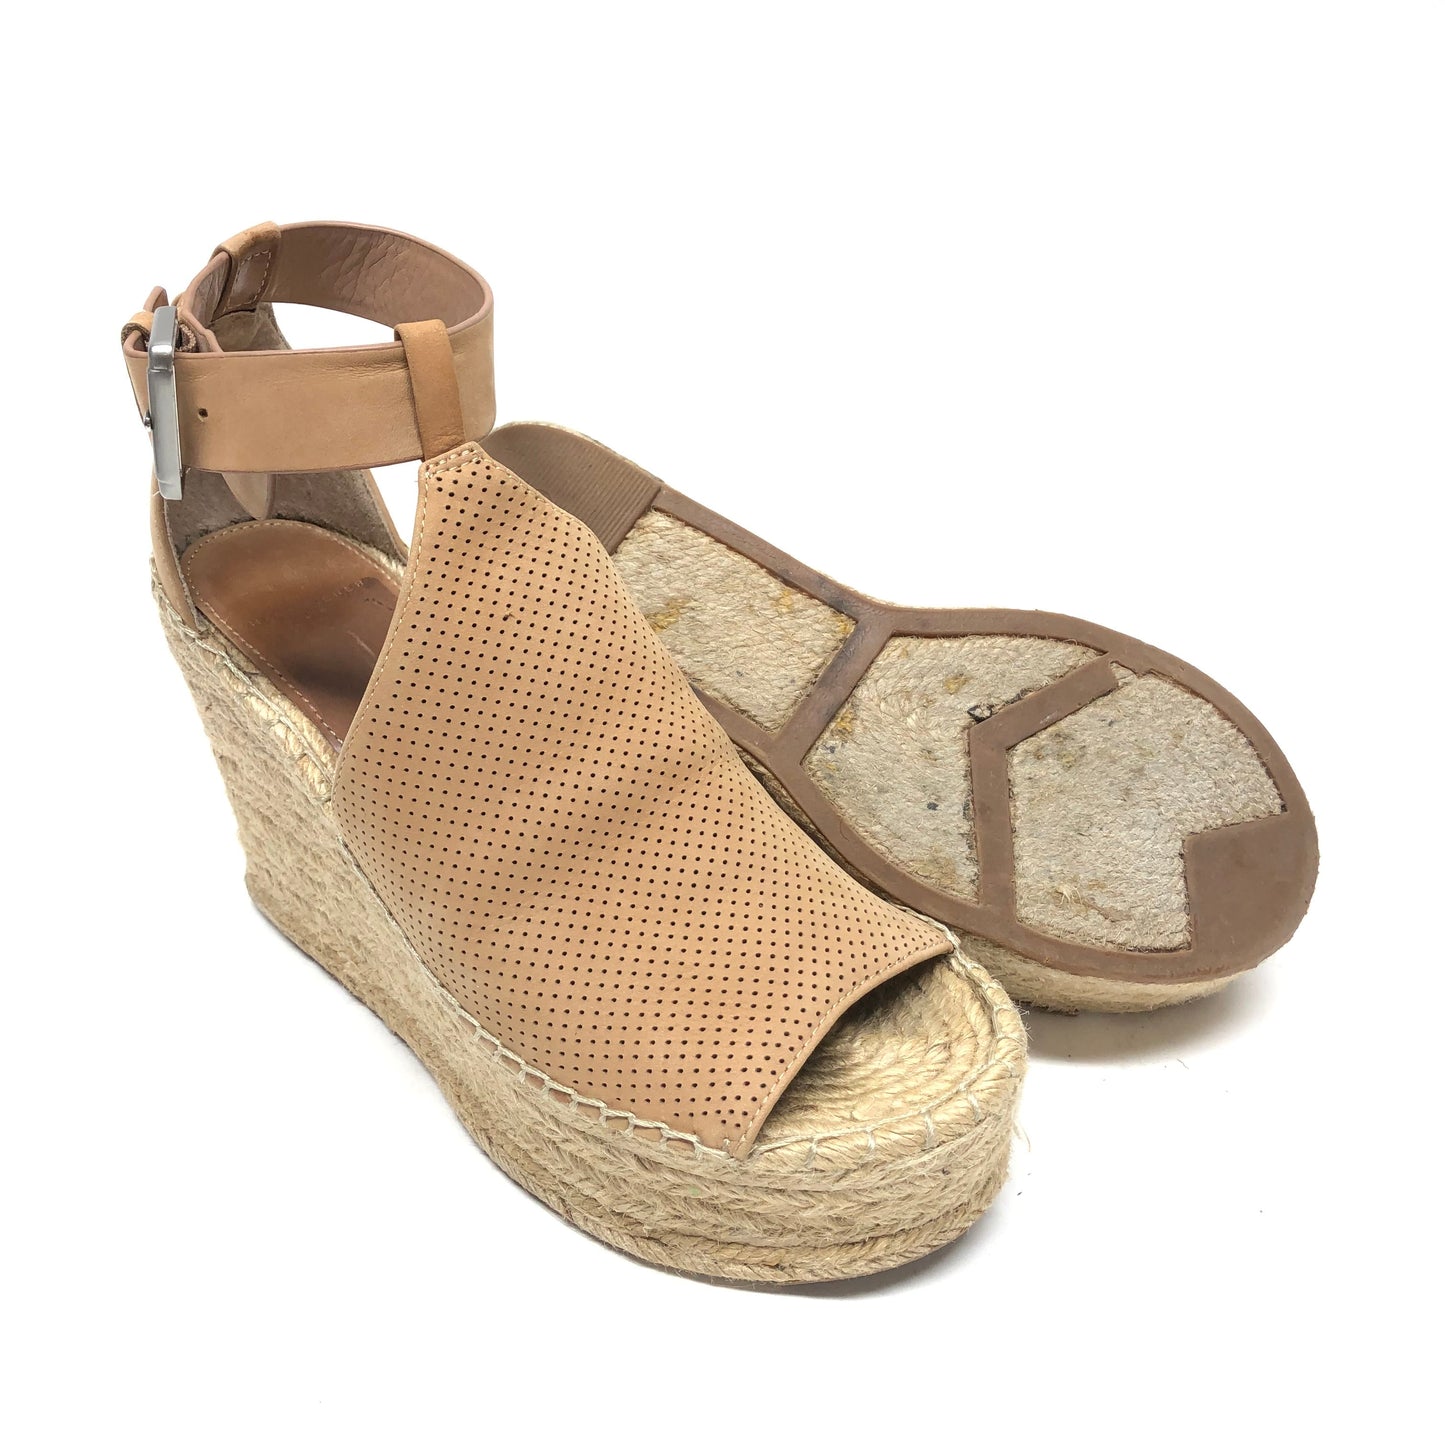 Sandals Heels Platform By Marc Fisher  Size: 8.5